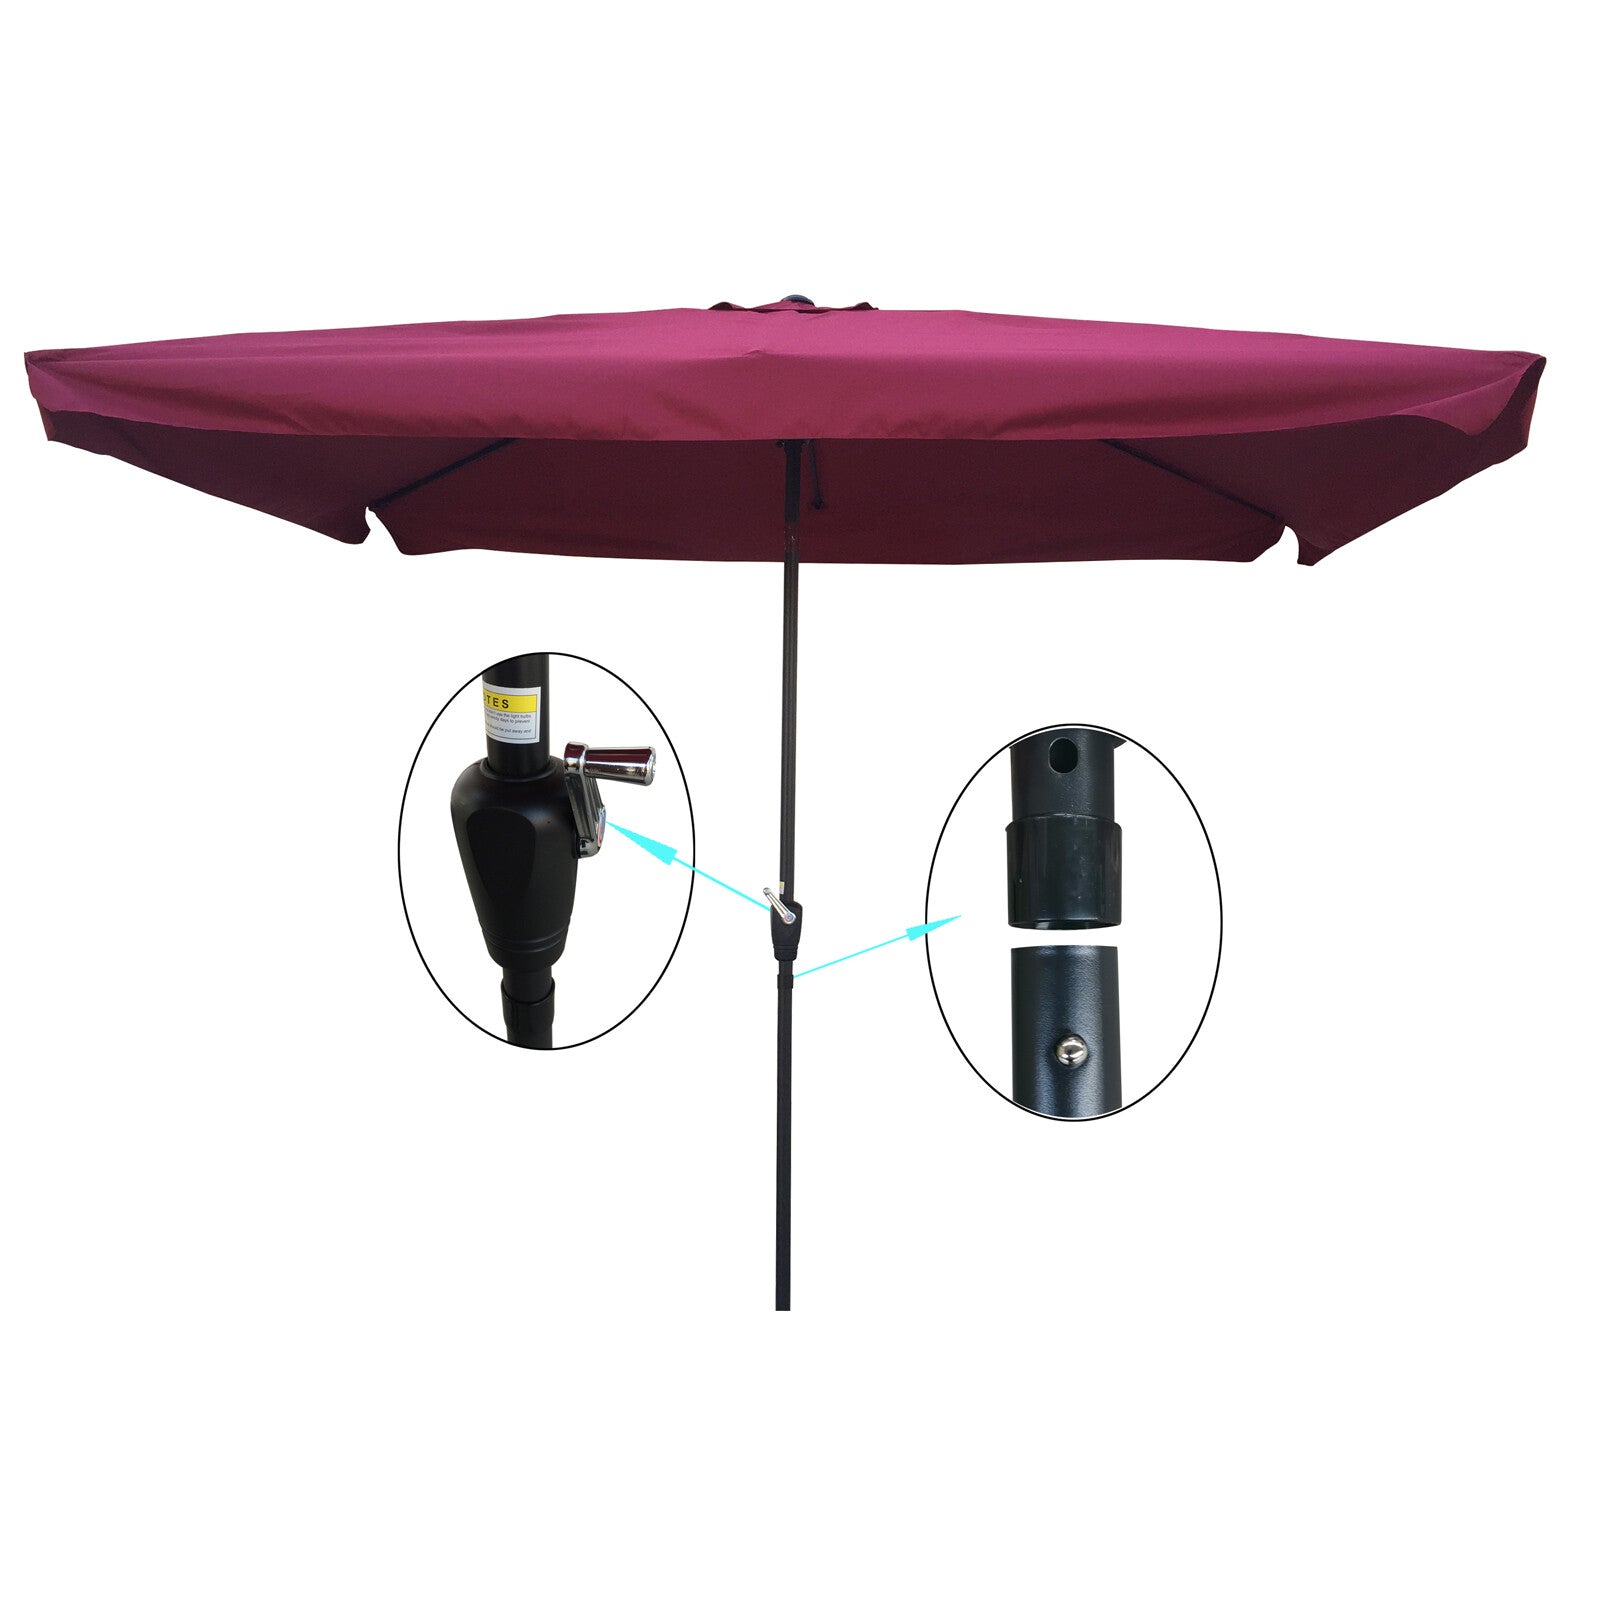 LINGJIA 10 x 6.5 Ft Patio Outdoor Umbrellas Rectangular Market Table Umbrellas with Crank and Push Button Tilt (Burgundy)